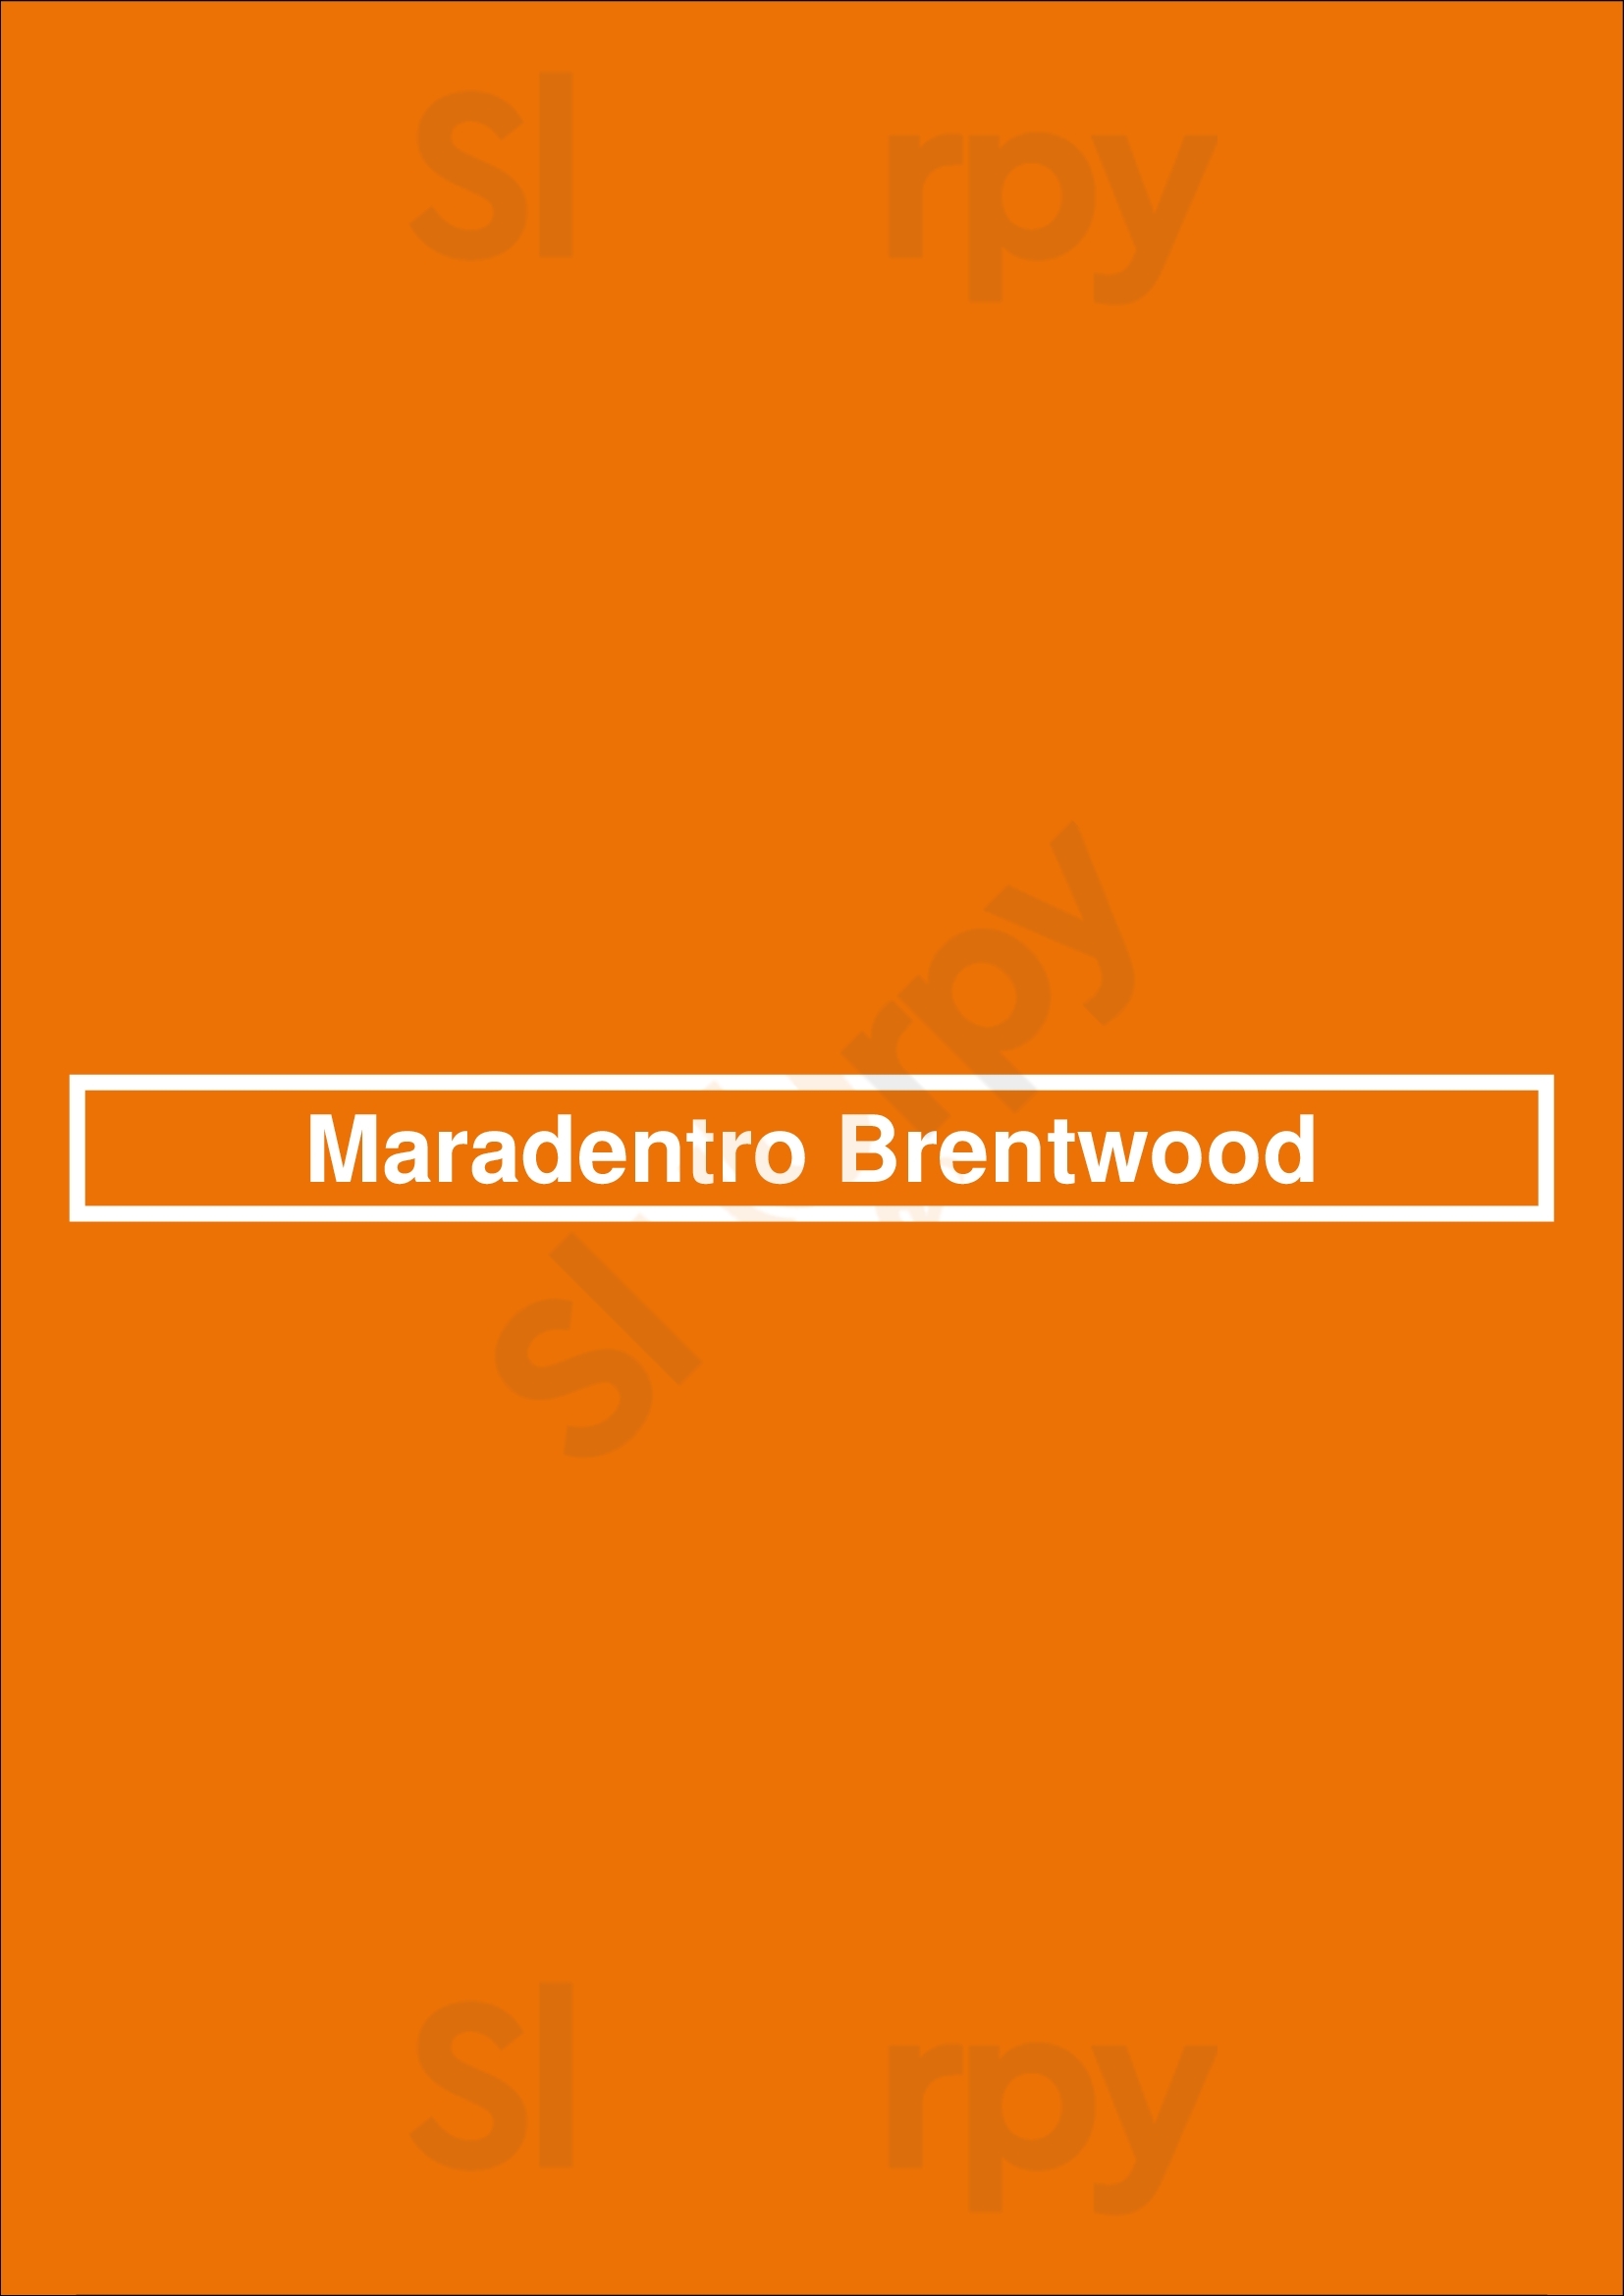 Maradentro Brentwood Los Angeles Menu - 1